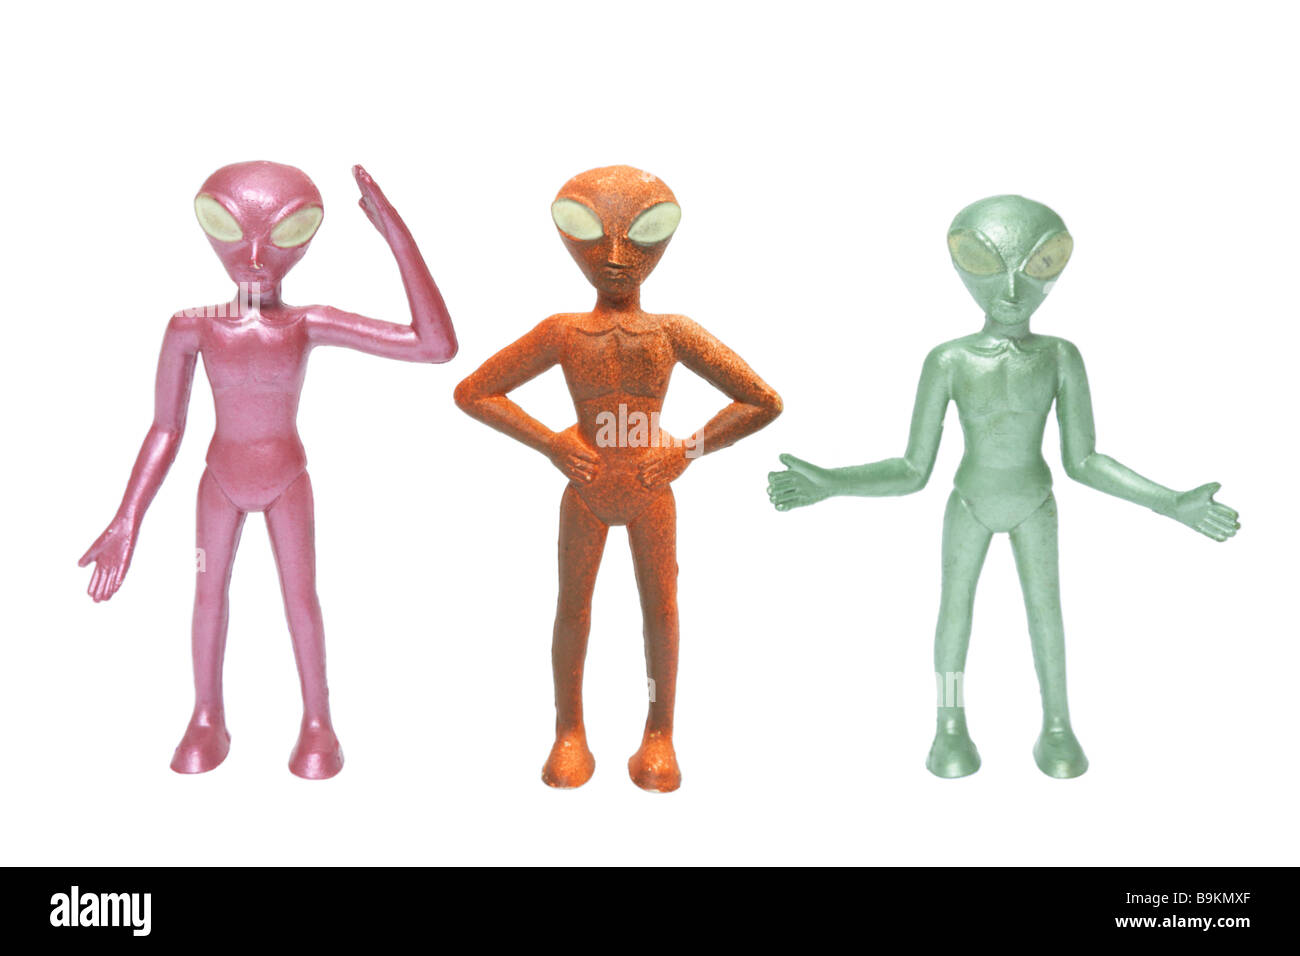 Toy Alien Figures Stock Photo